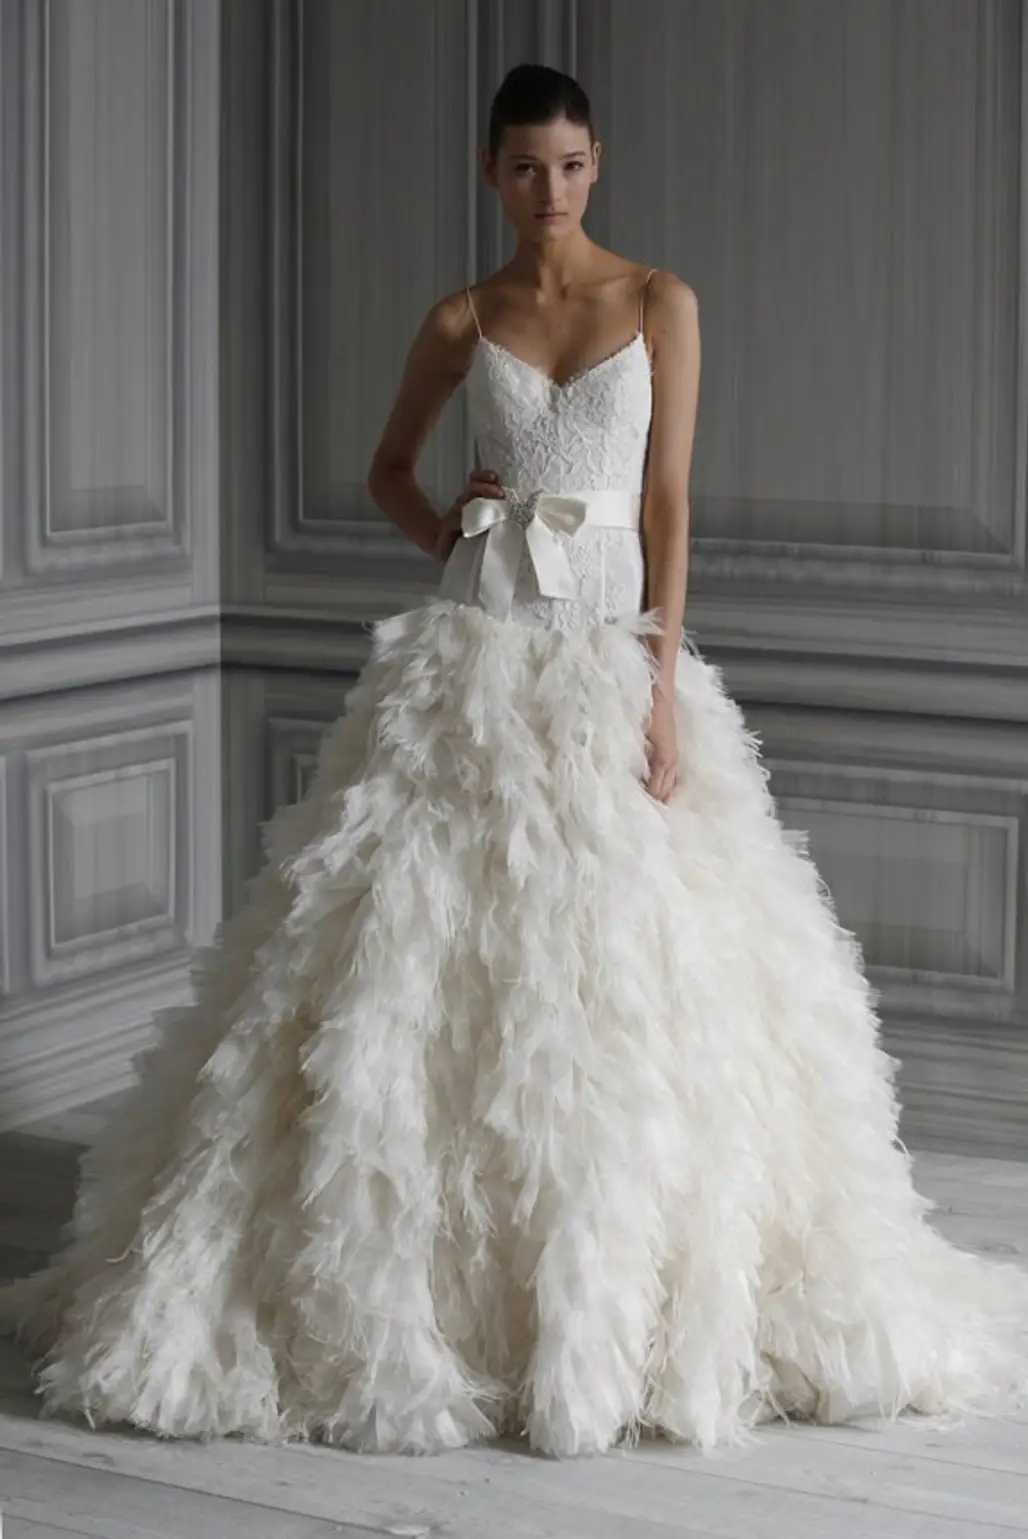 Feather Themed Wedding Dress...